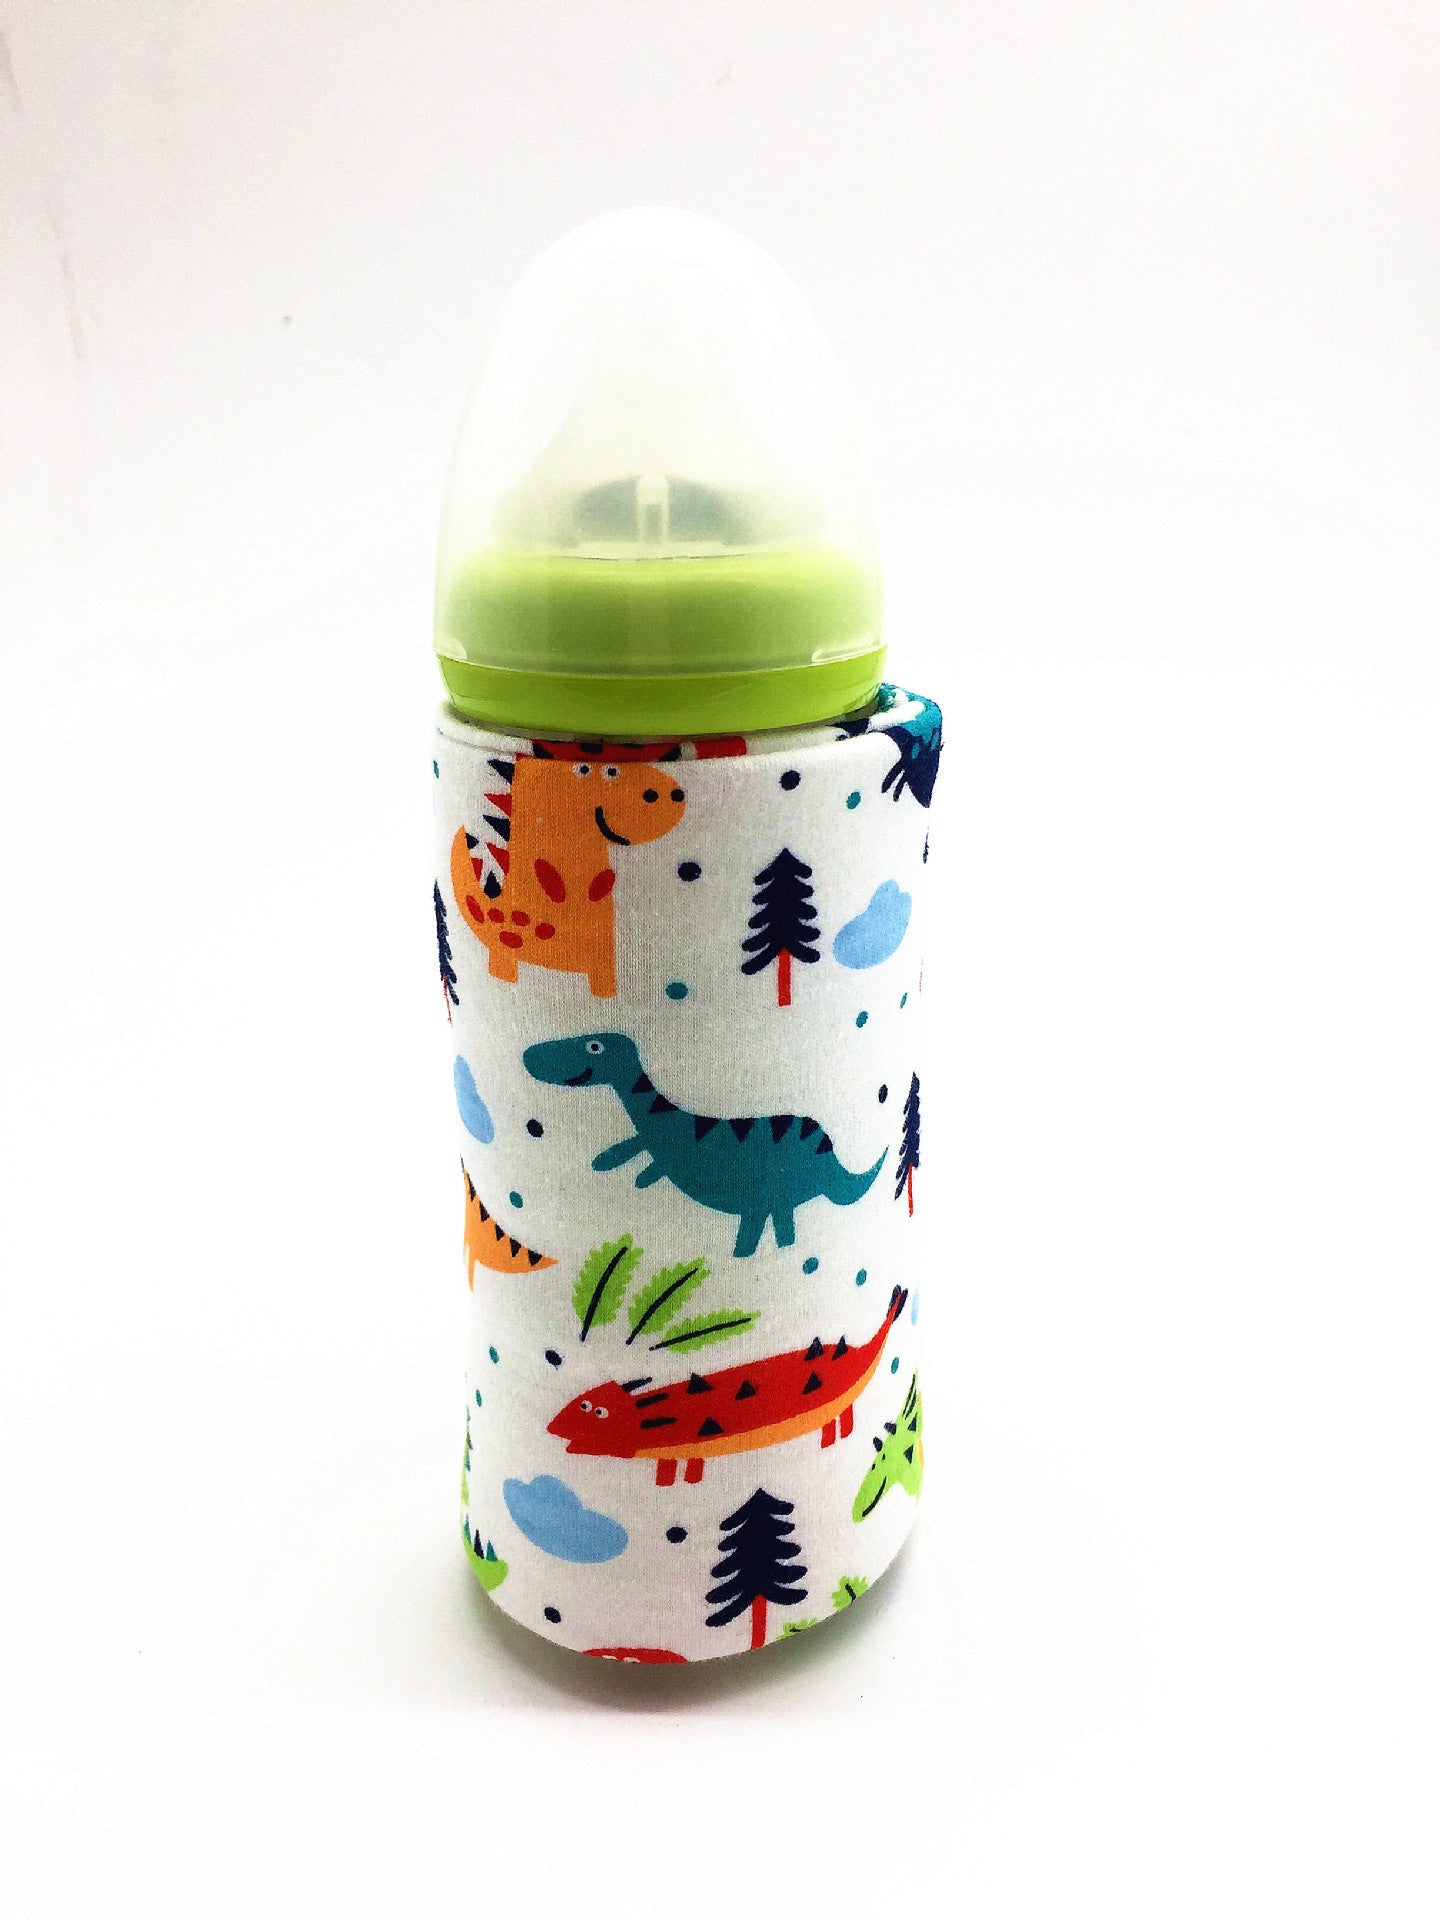 USB Milk Water Warmer Travel Stroller Insulated Bag Portable Baby Nursing Bottle Heater Cover Baby Food Warmer Bottle Warmer